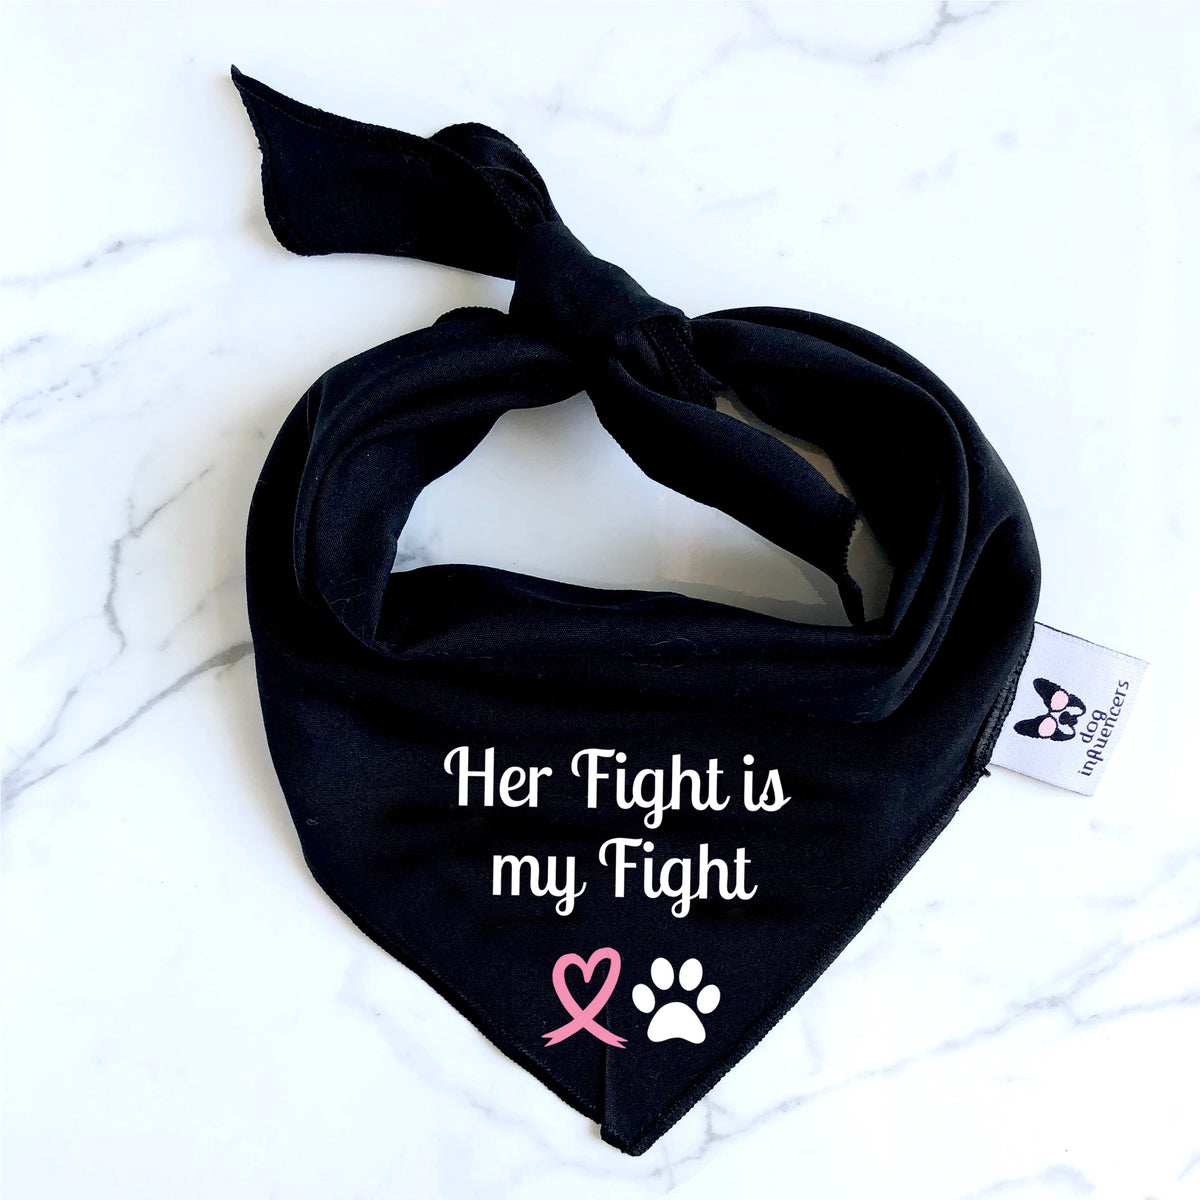 Cancer Dog Bandana - "Her Fight is My Fight" - Breast Cancer Support Dog Bandana